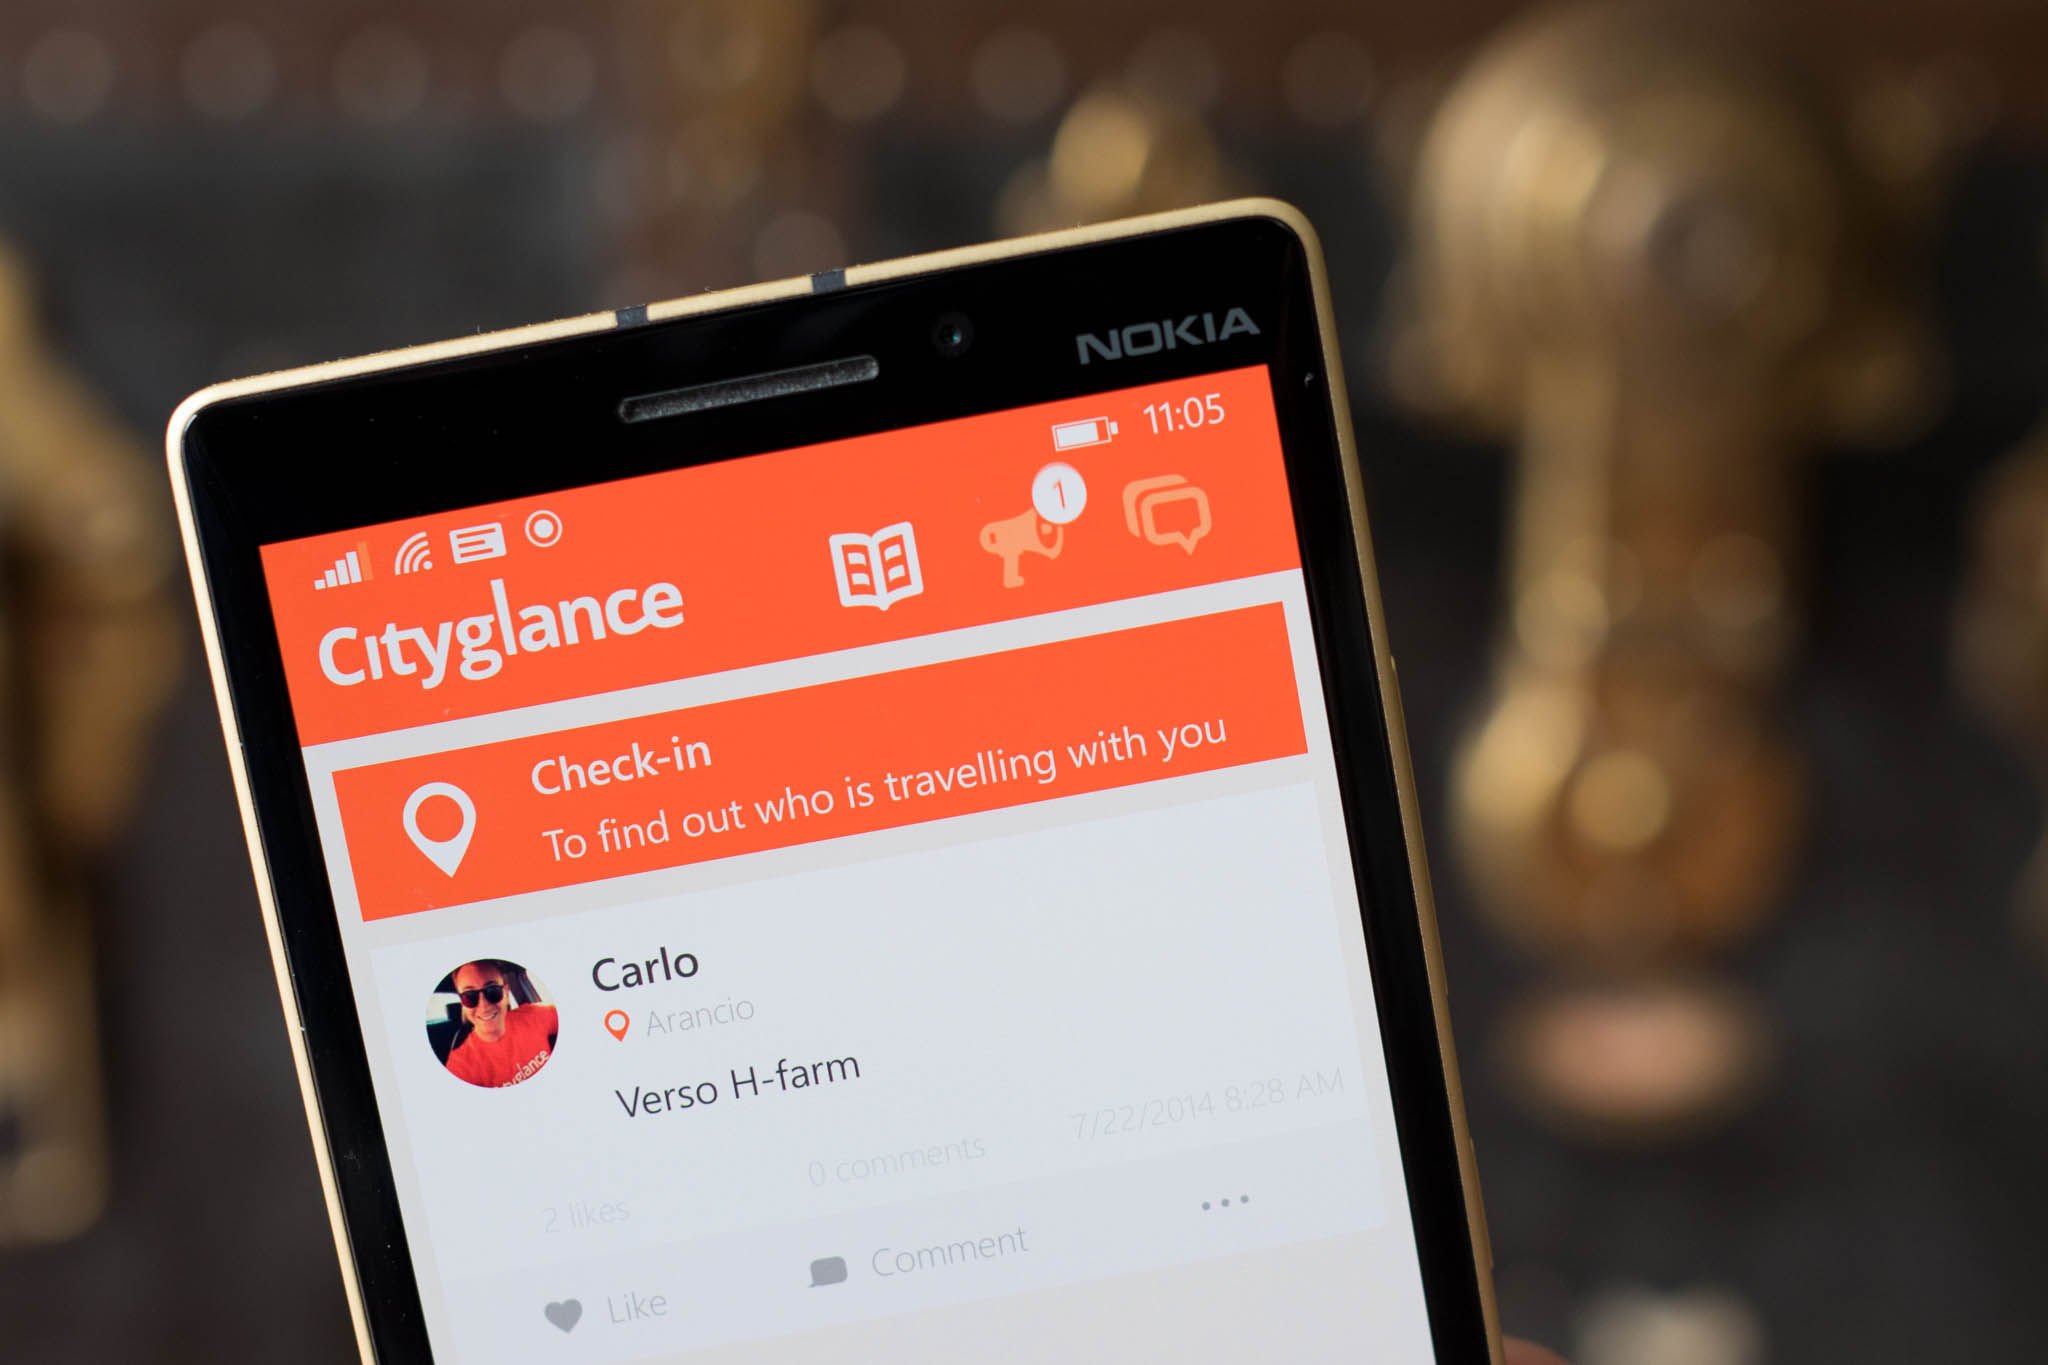 Cityglance for Windows Phone photo